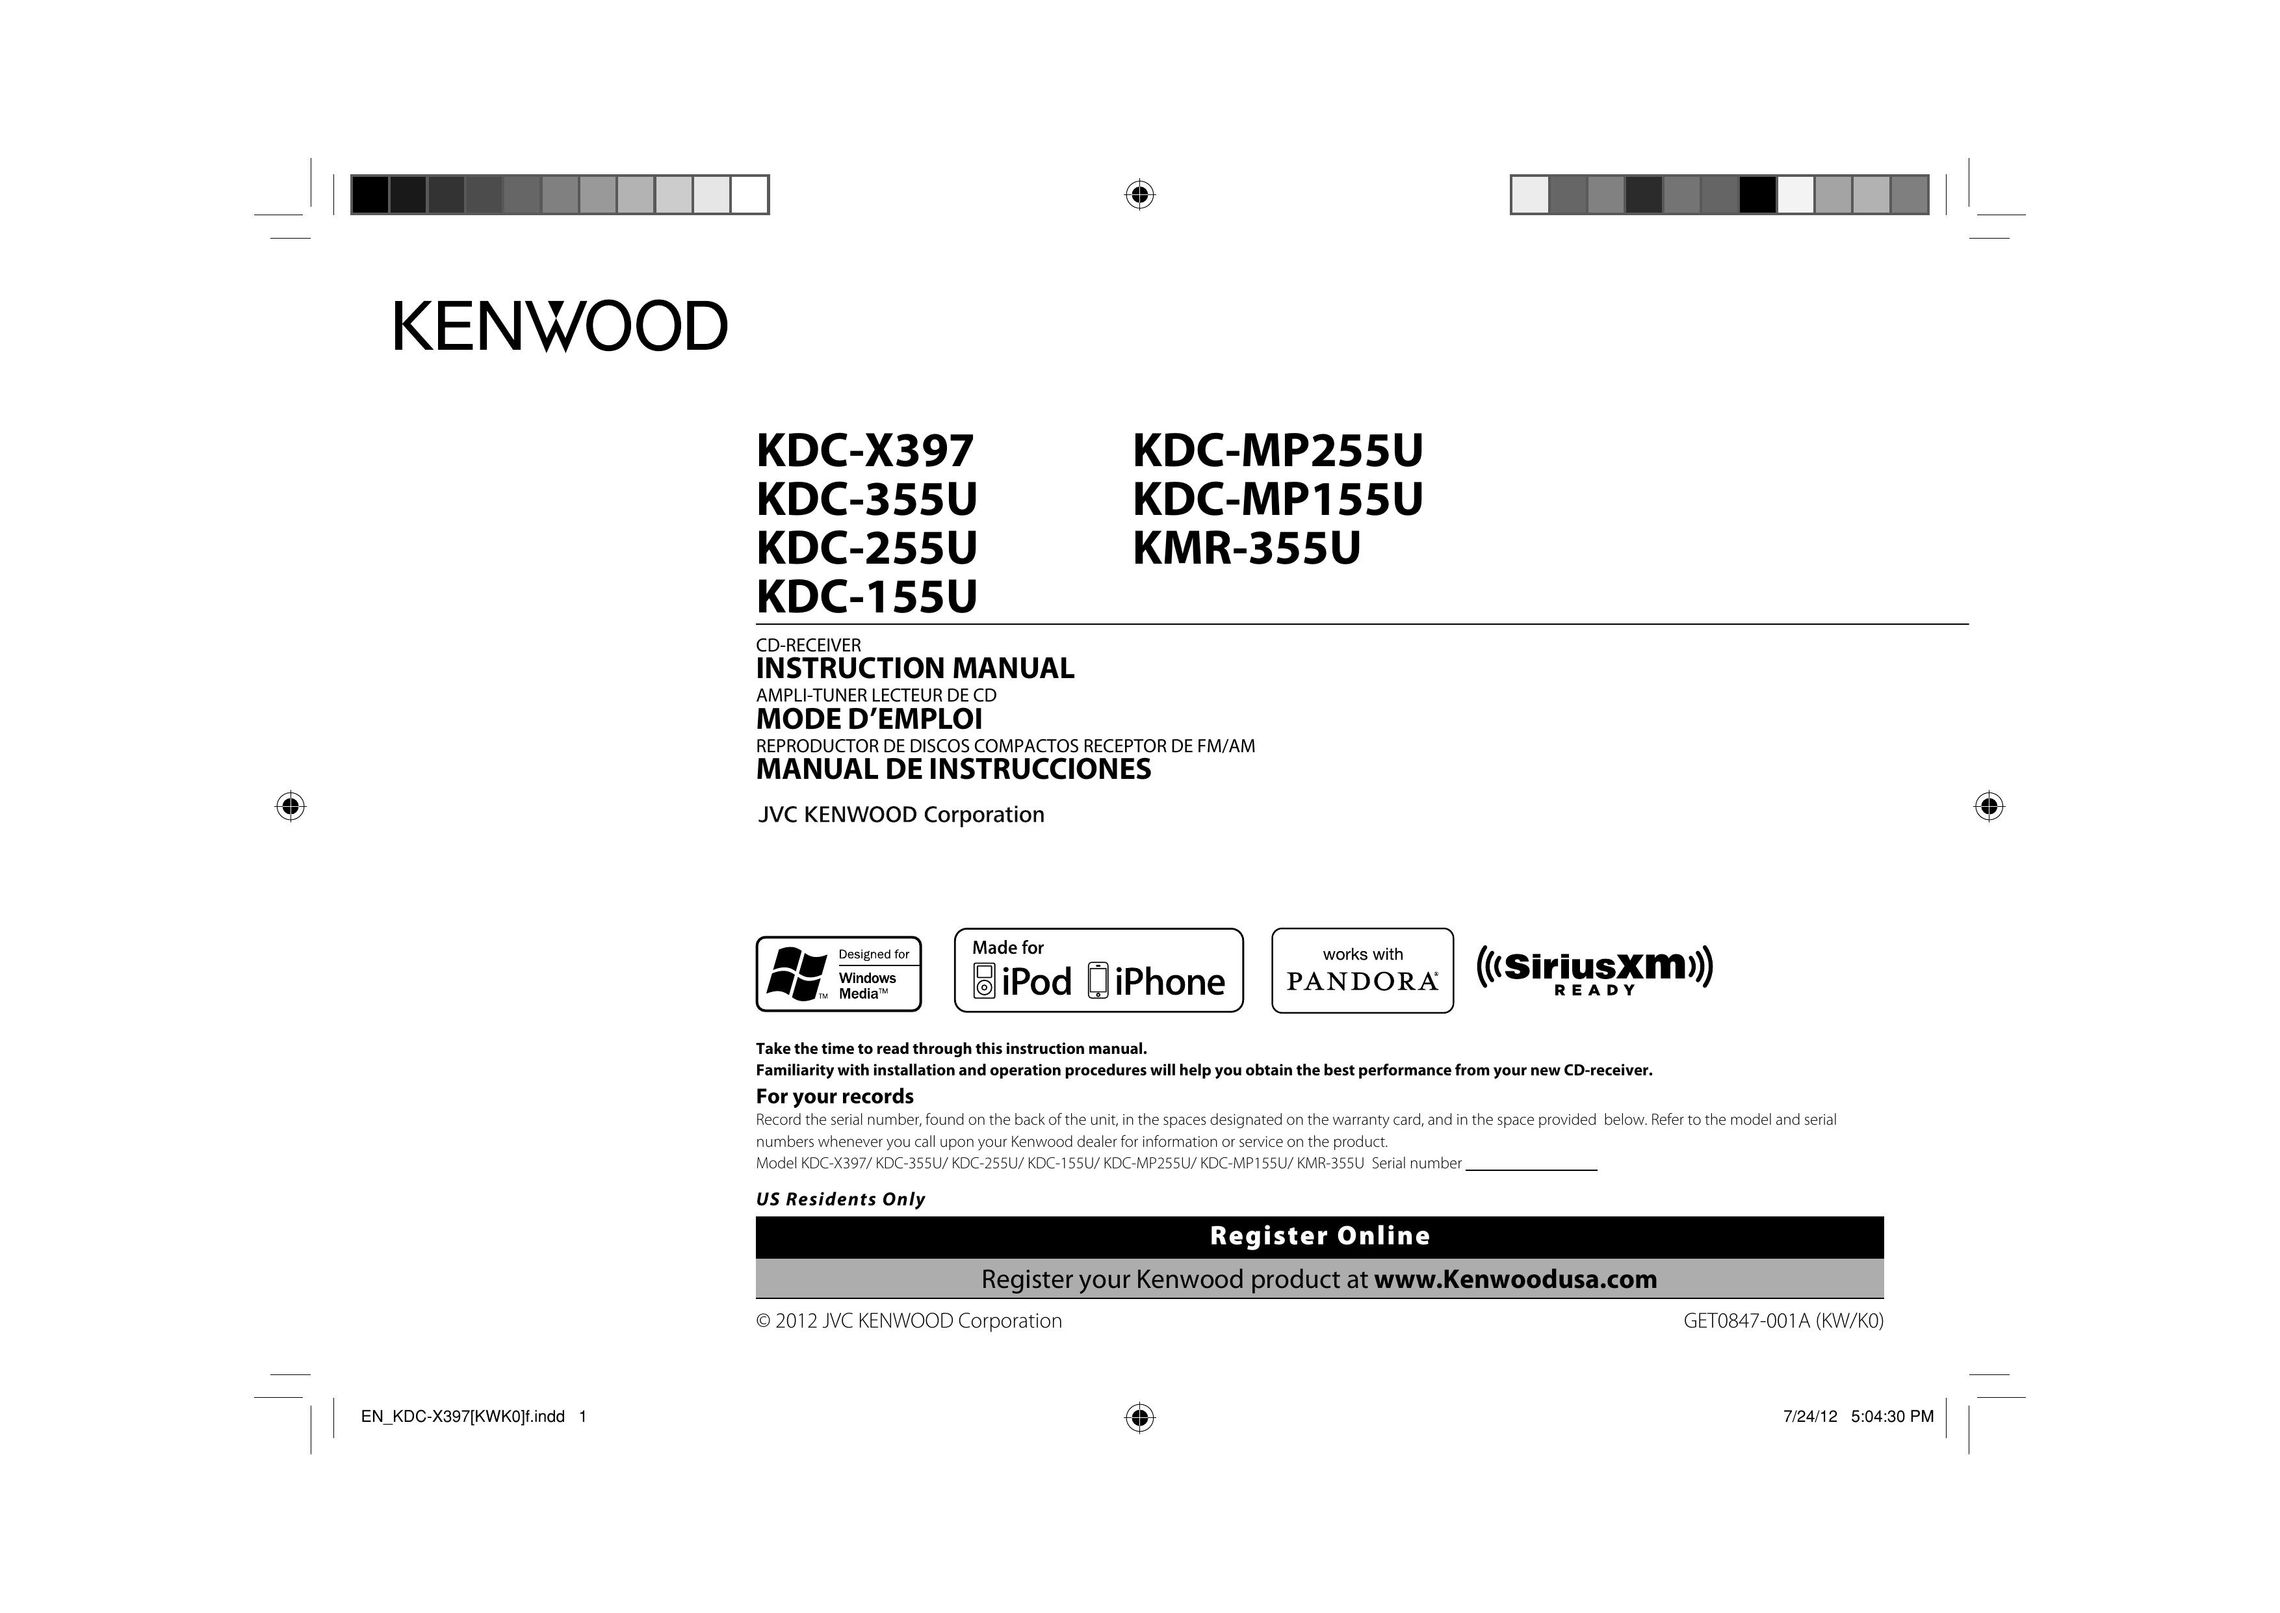 Kenwood KDC-X397 Car Speaker User Manual